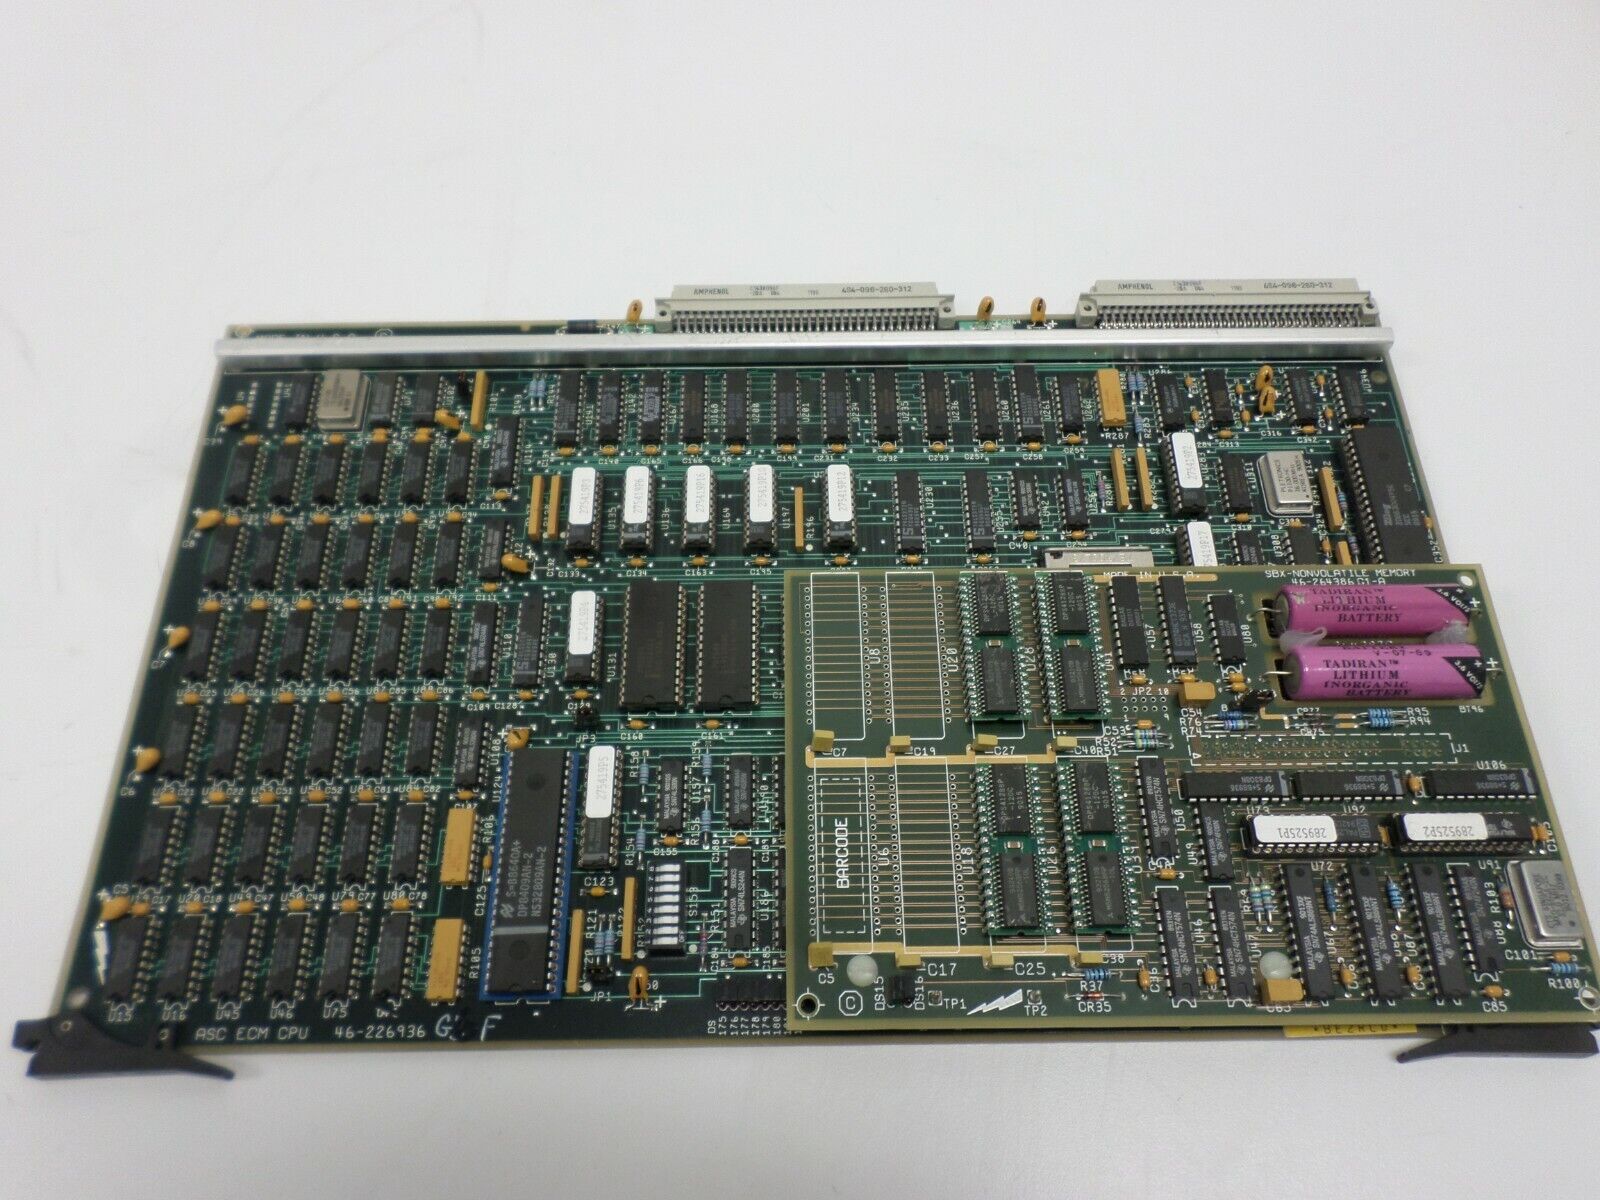 GM ASC ECM CPU 46-226936 G6-F & SBX-Nonvolatile Memory 46-264386 G1-A Board